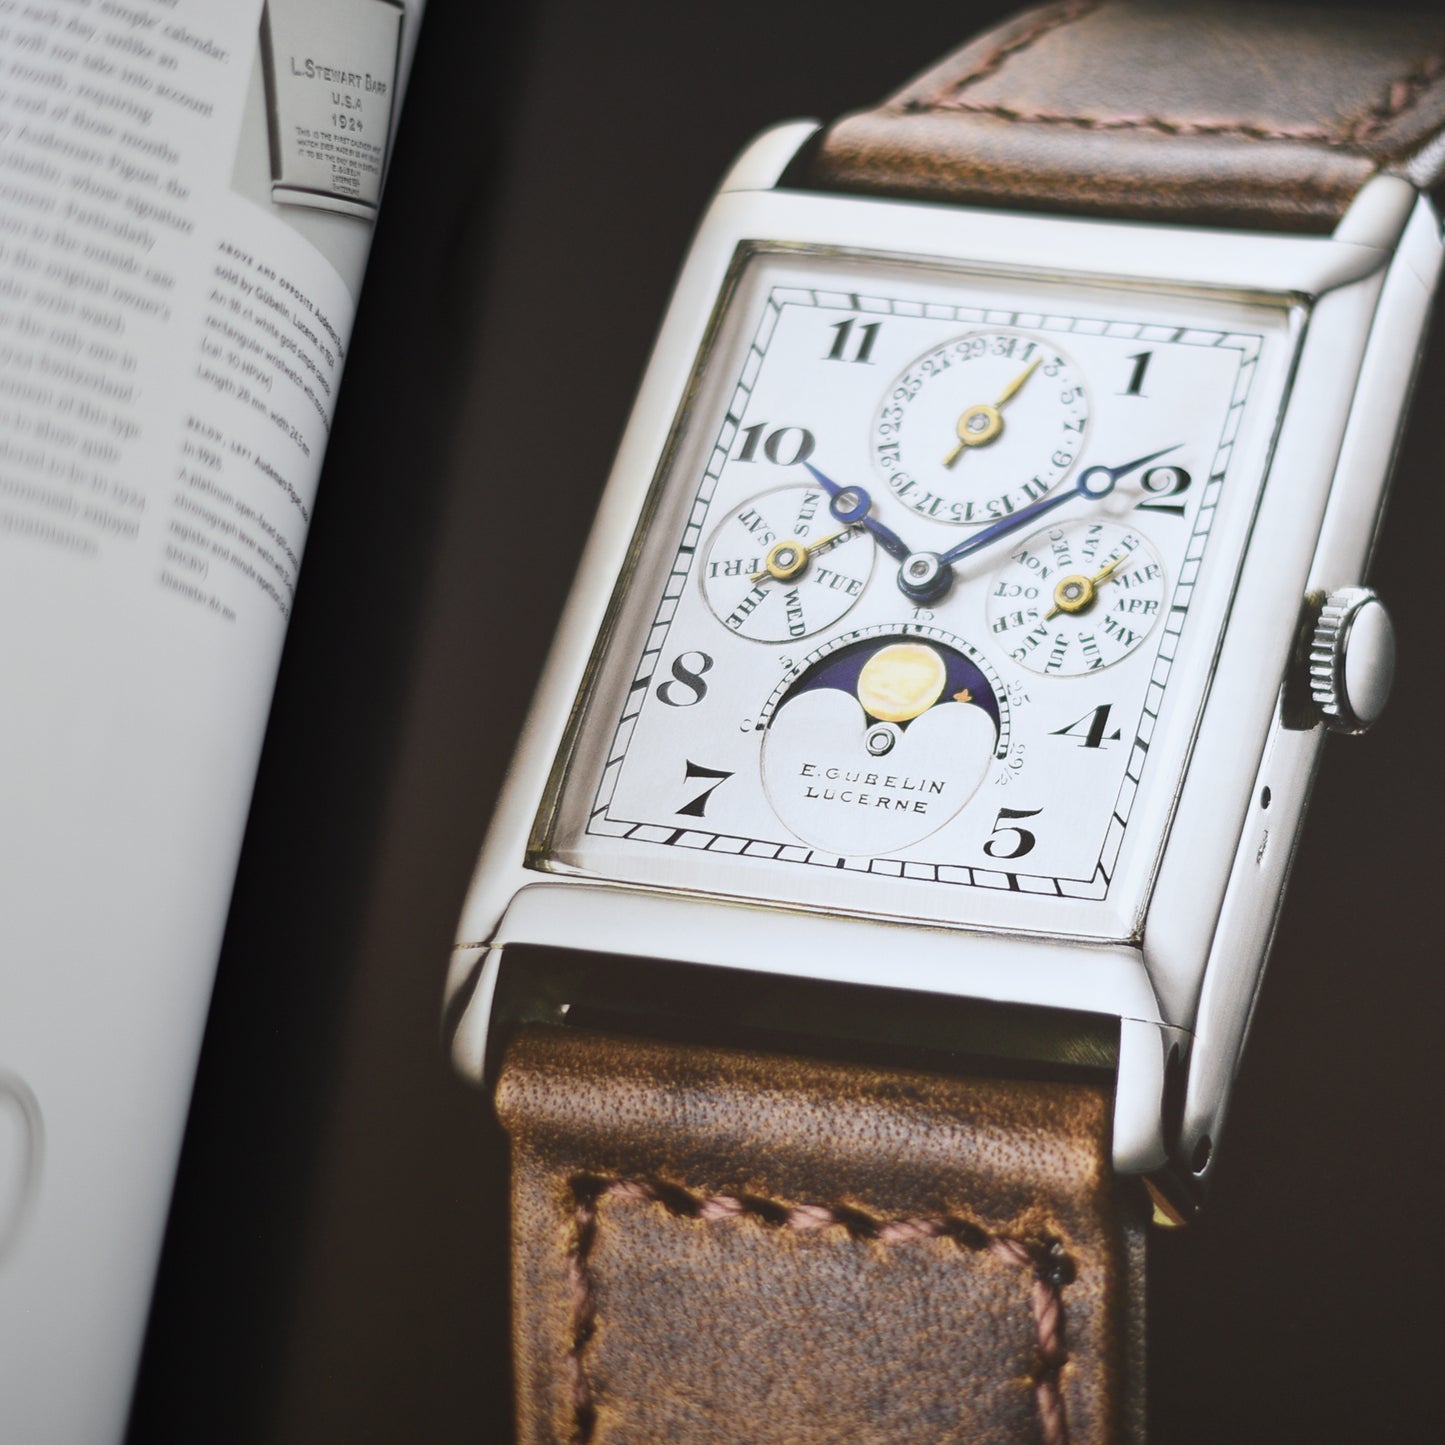 The Watch A Twentieth-Century Style History